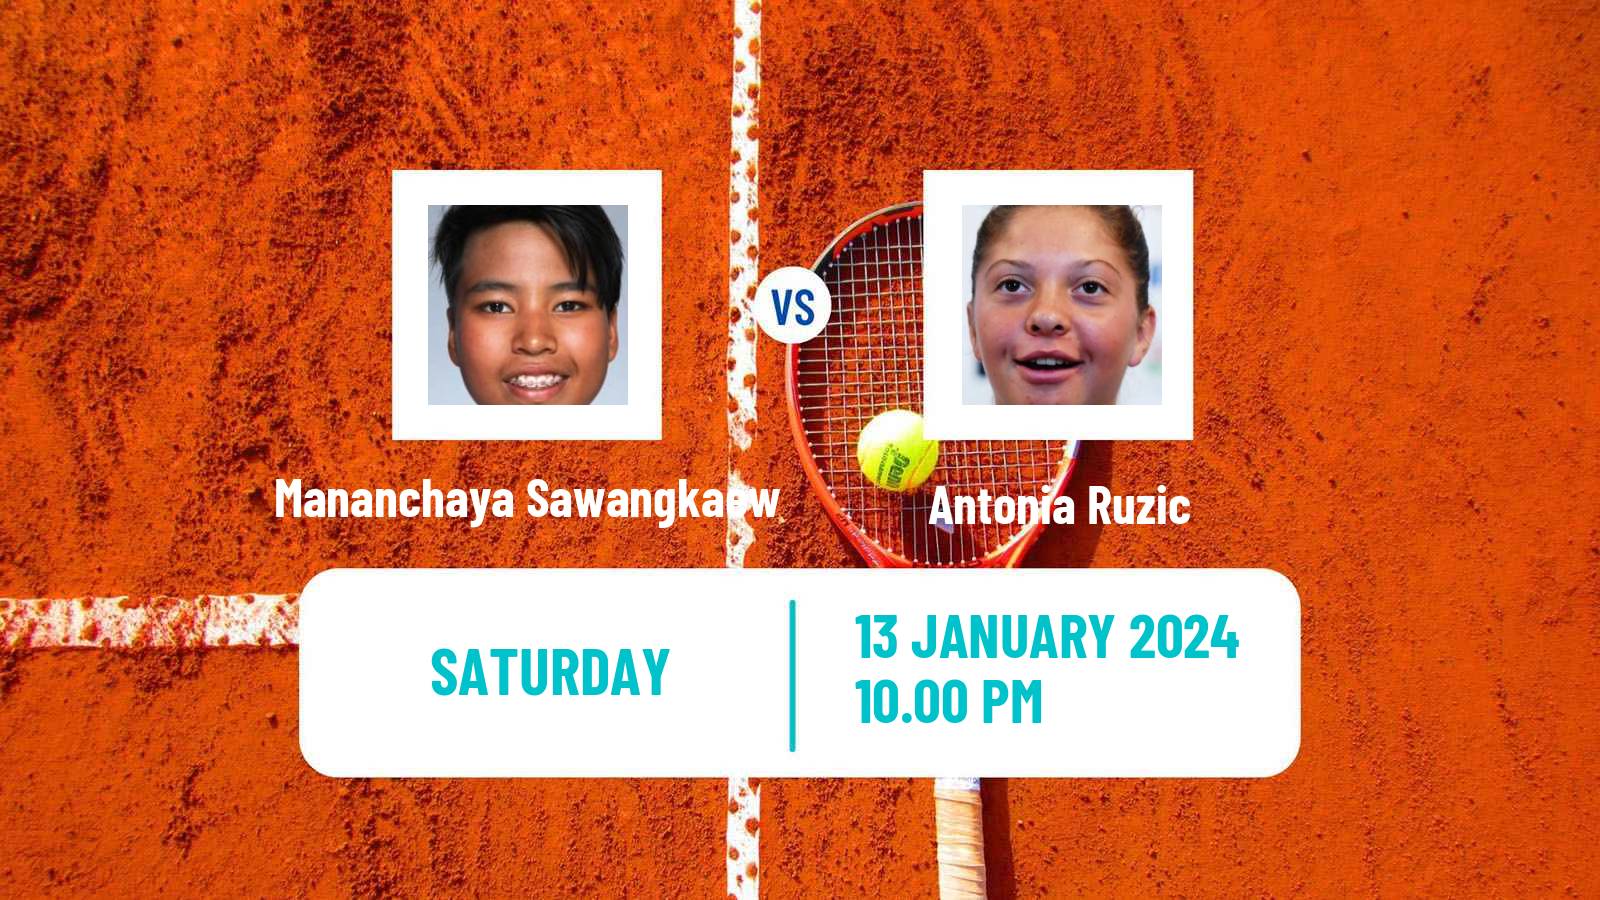 Tennis ITF W50 Nonthaburi 2 Women Mananchaya Sawangkaew - Antonia Ruzic